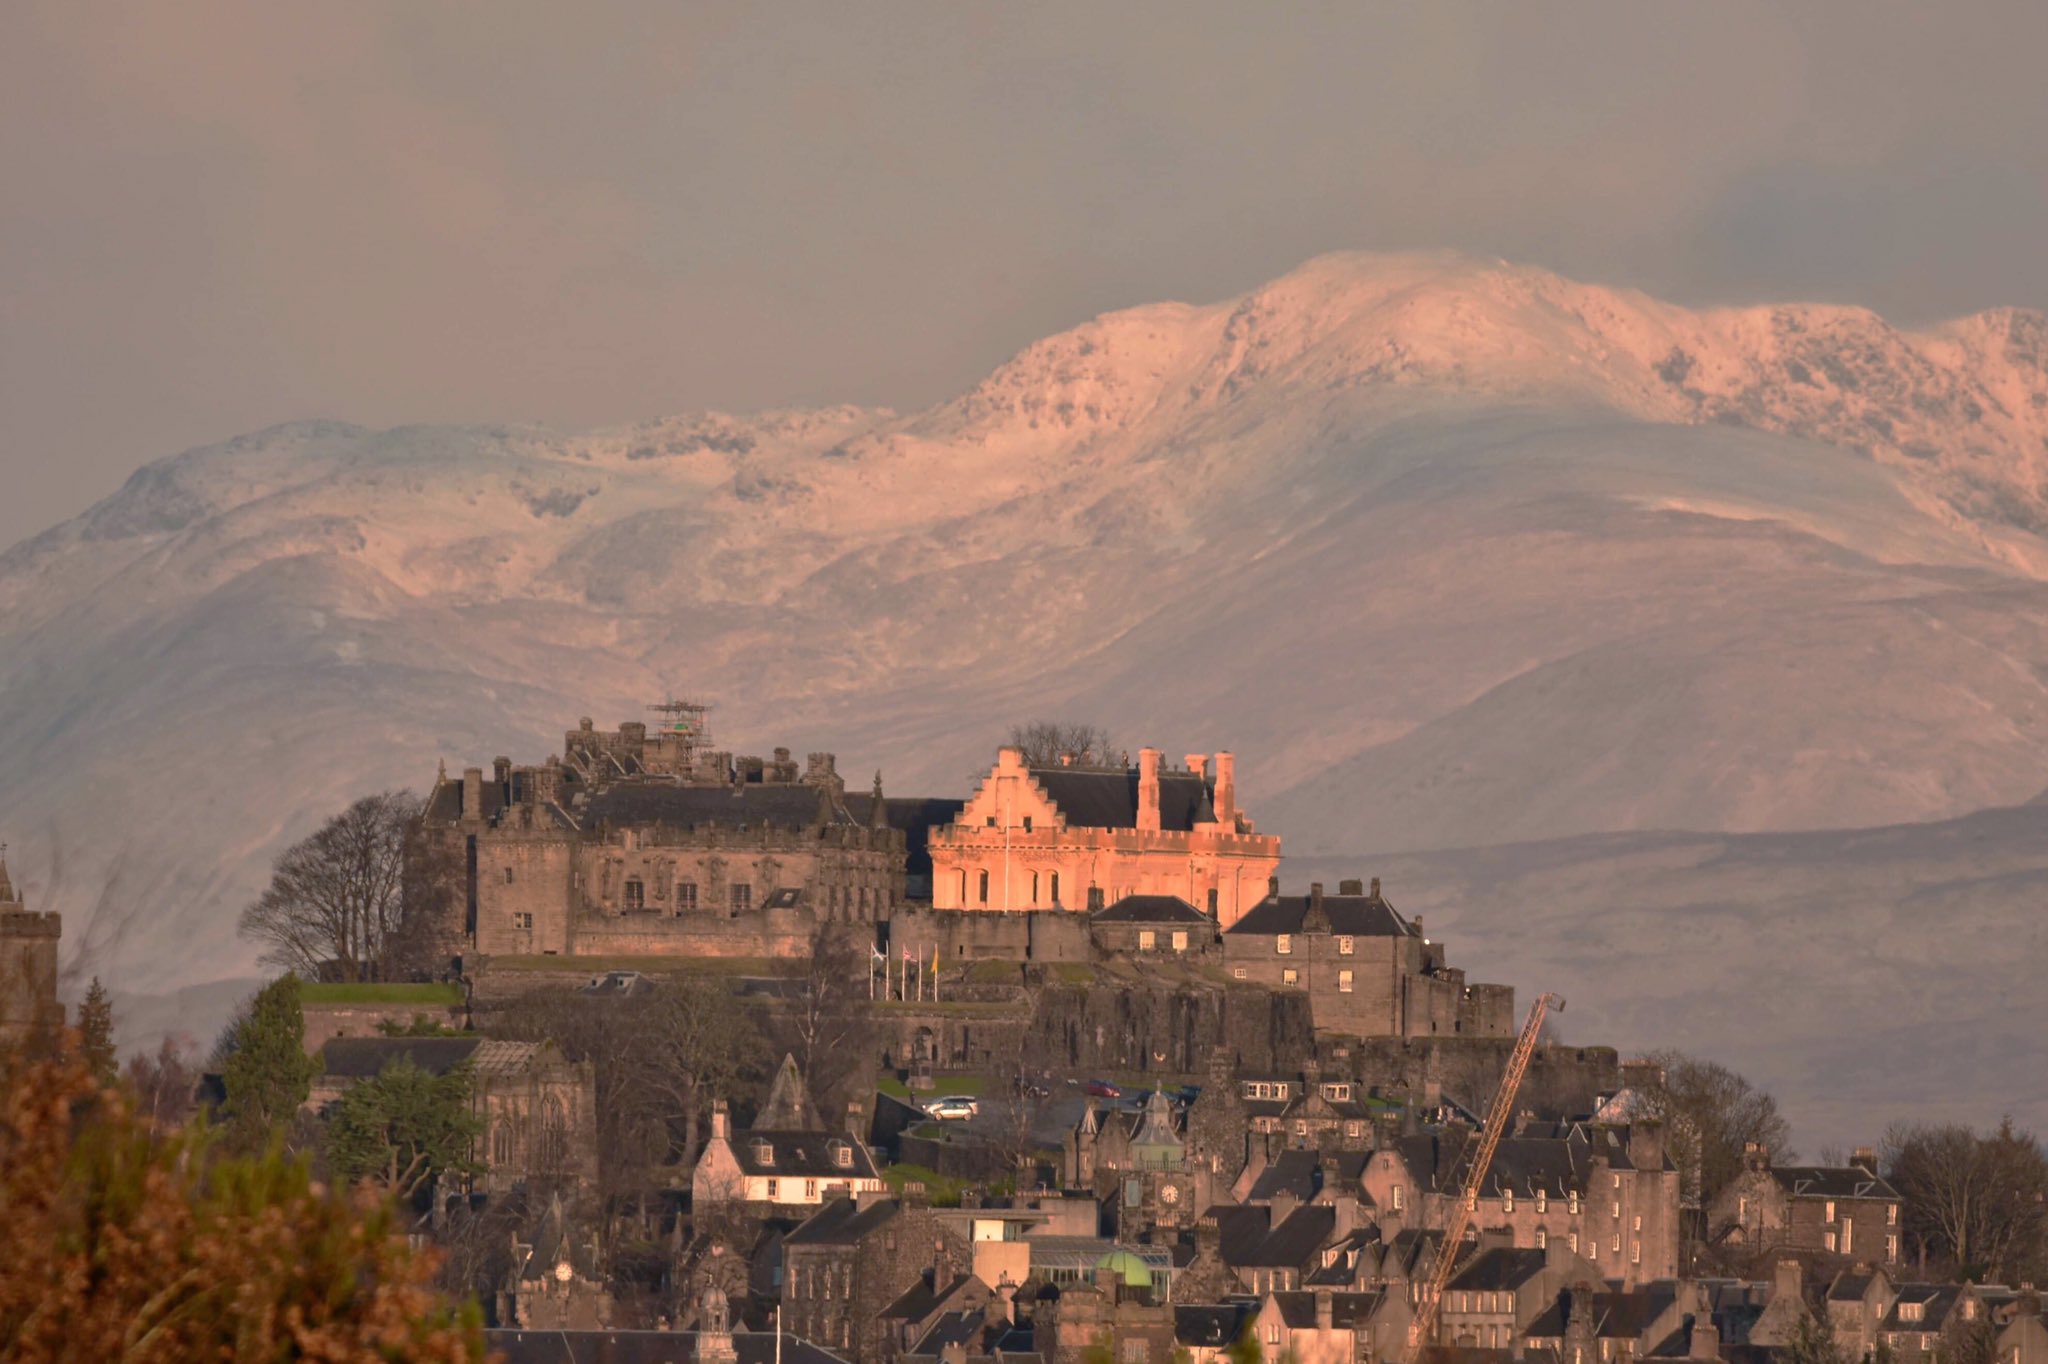 Sunrise over Stirling Castle by Charles McGuigan.